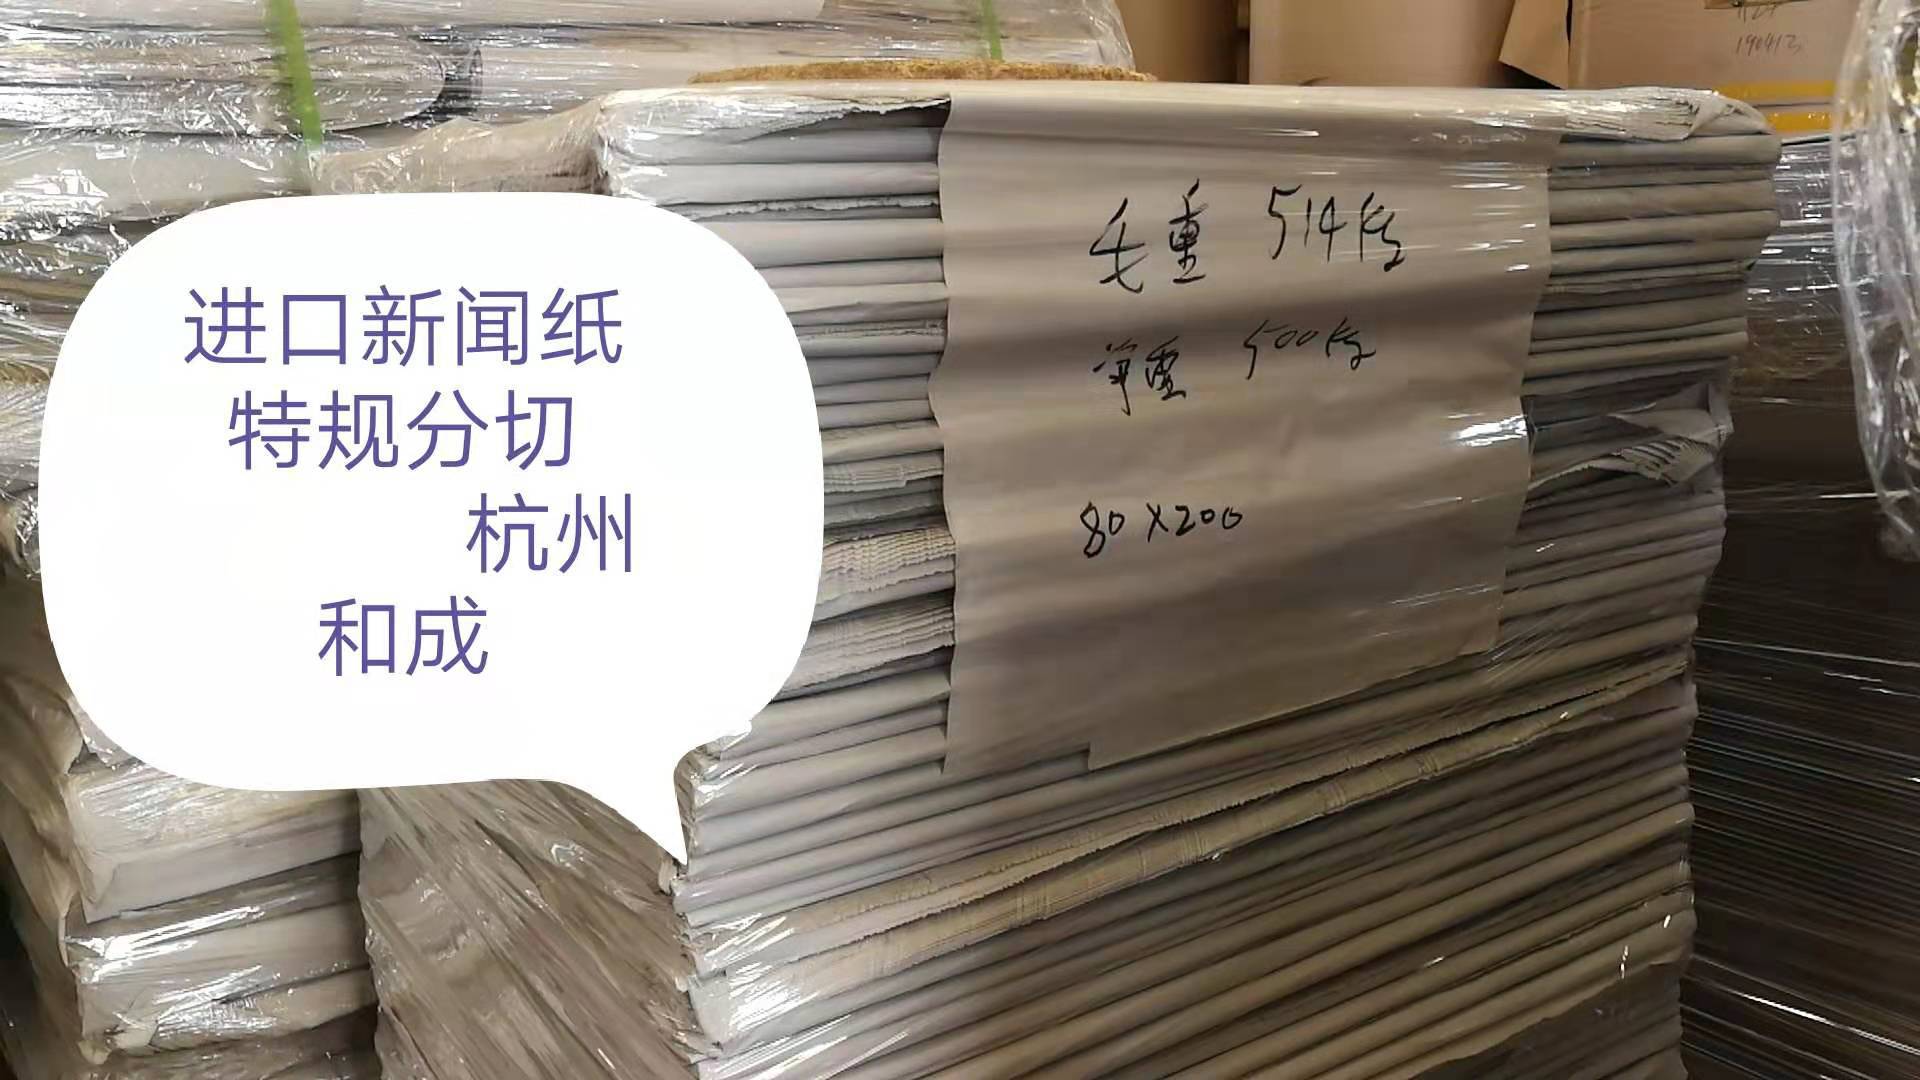 30 Press paper,Making paper!Free slicing Hangzhou Manufactor Of large number Price reduction Price reduction!